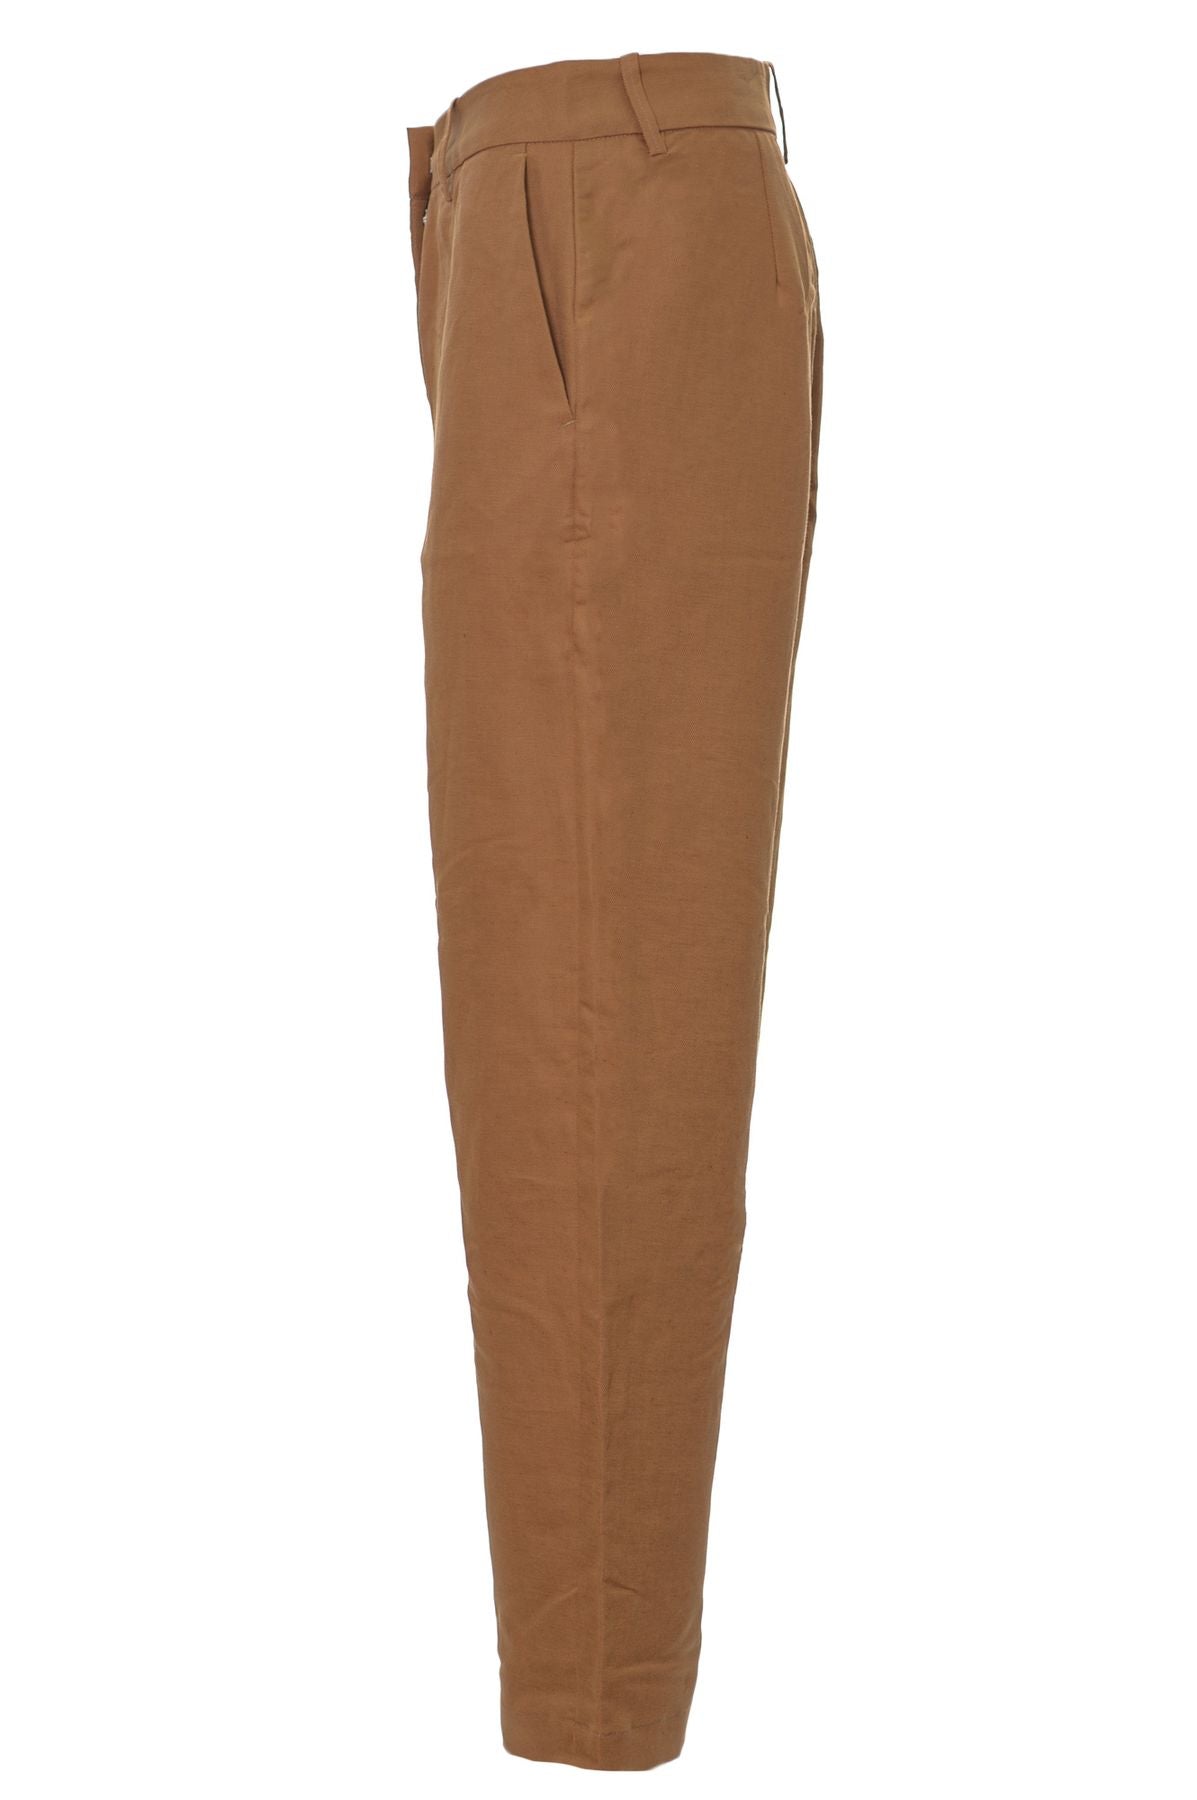 PEUTEREY Spring/Summer Linen Trousers